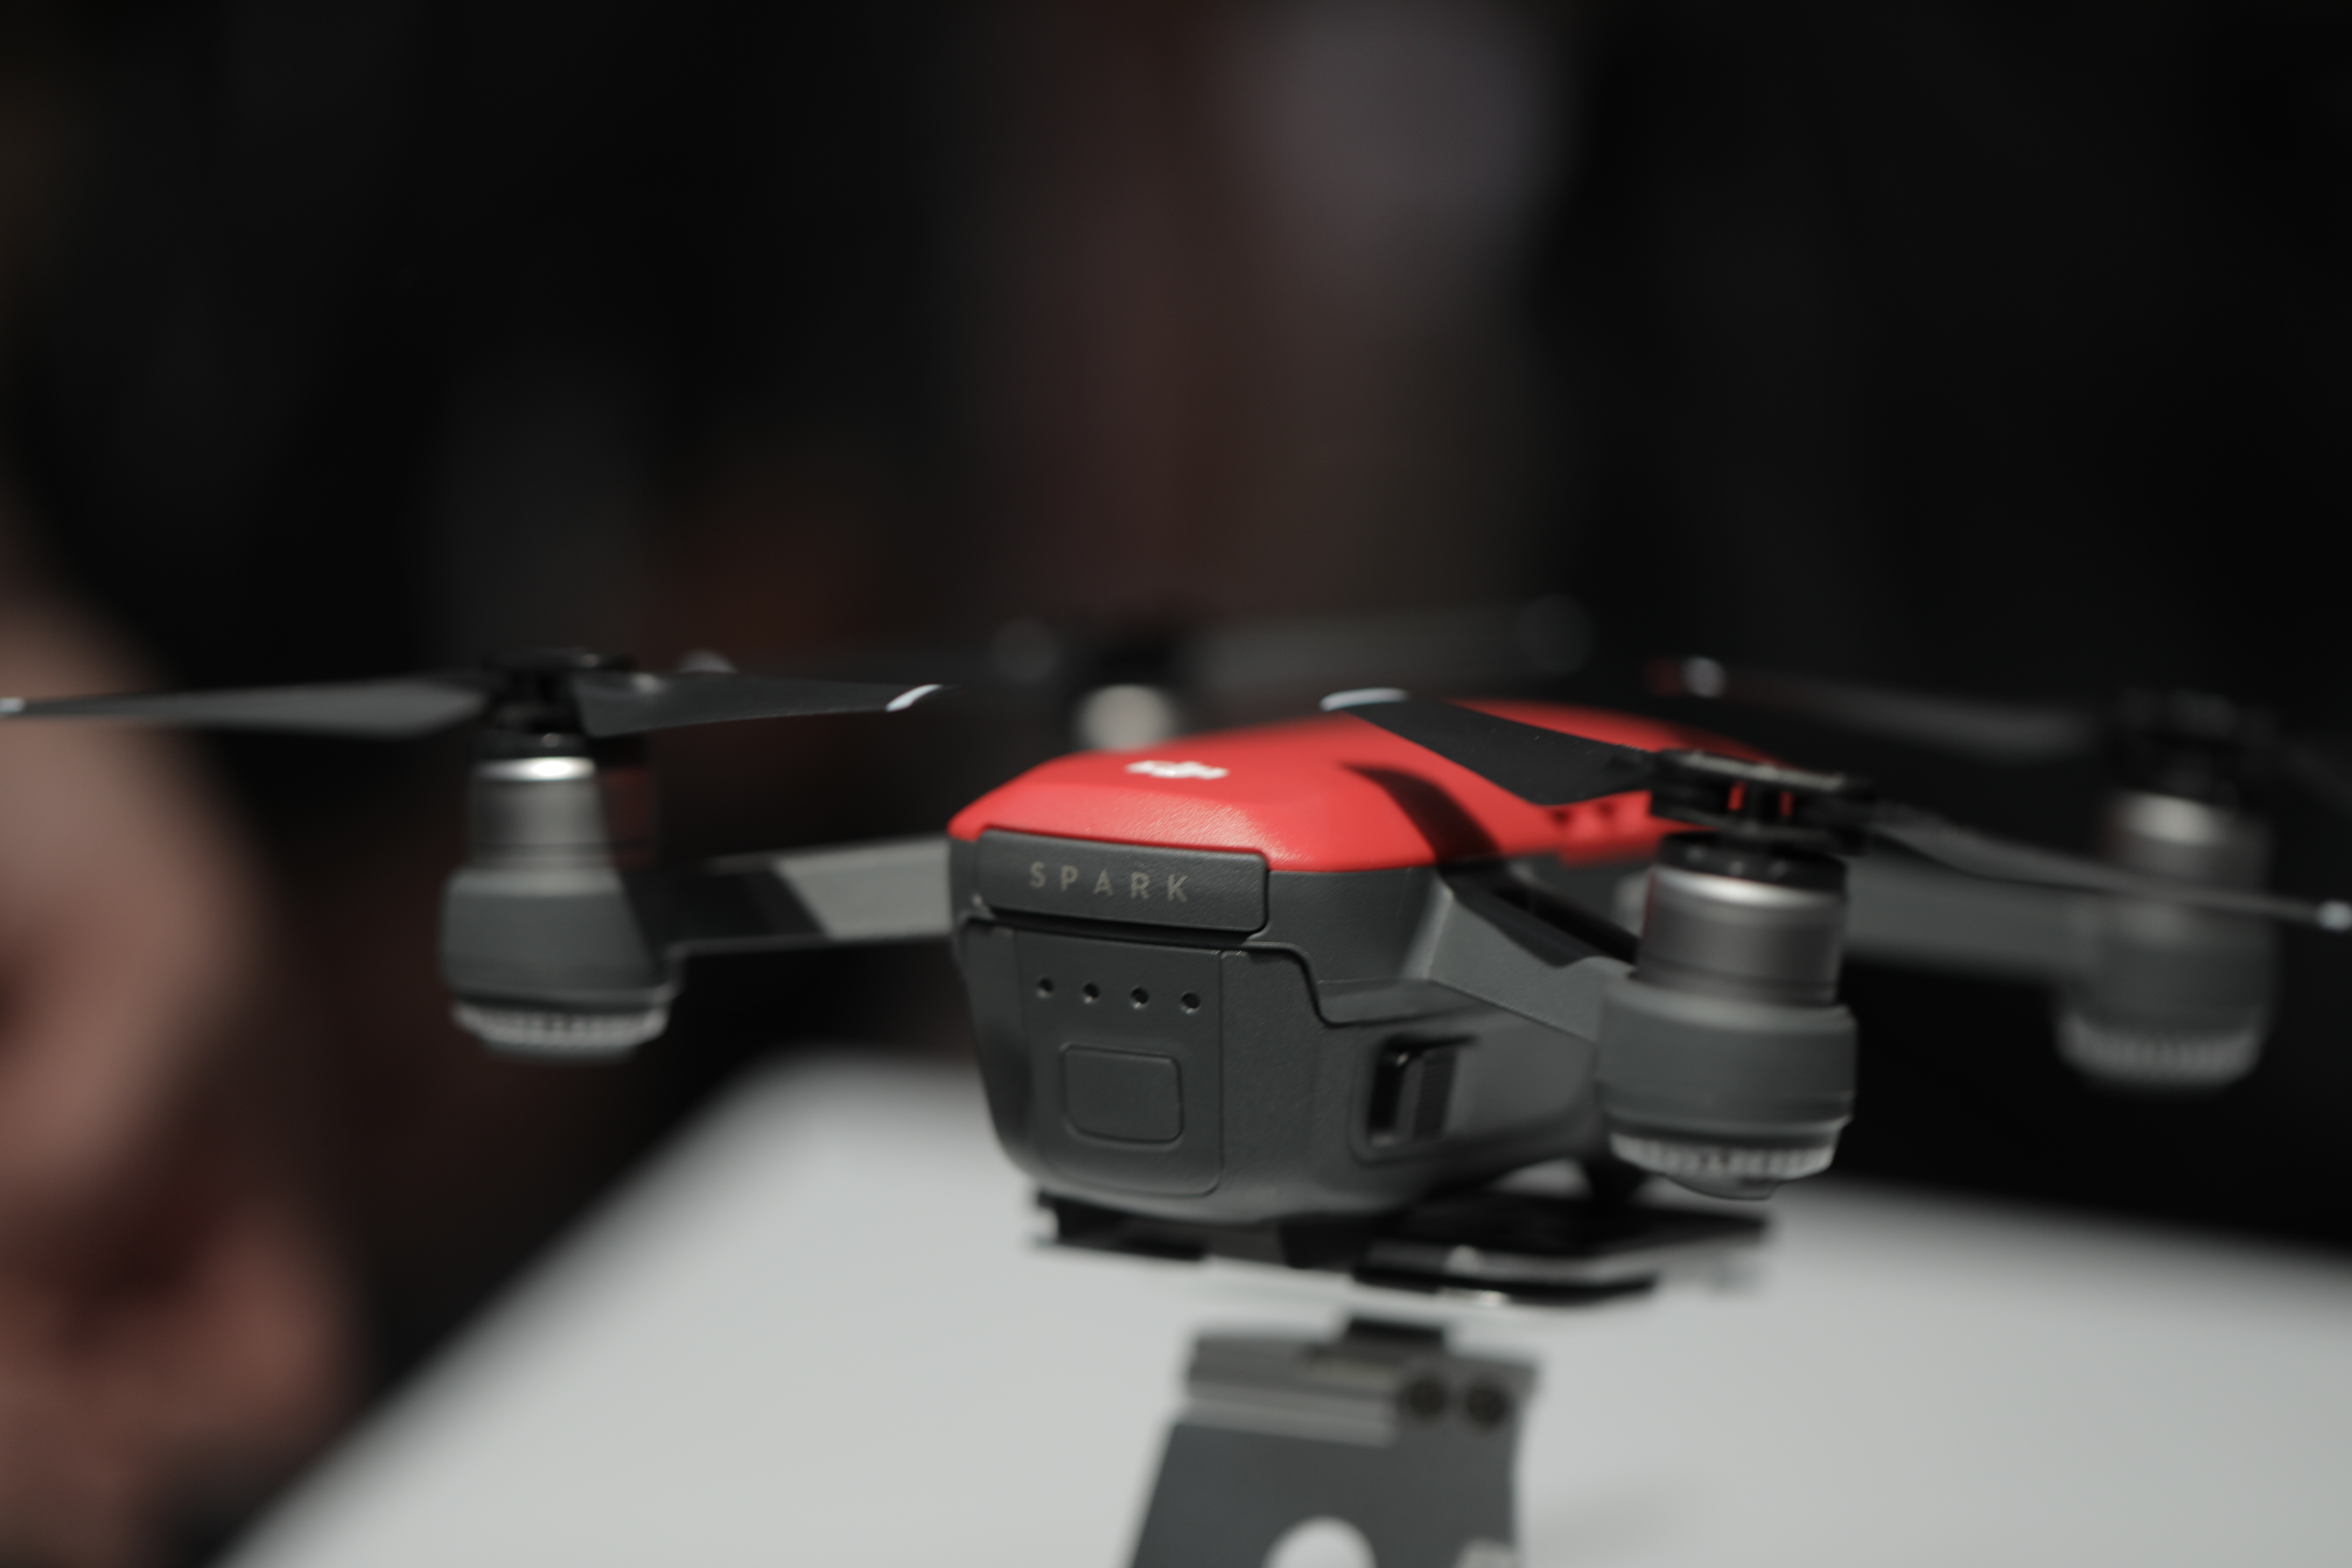 spark drone camera